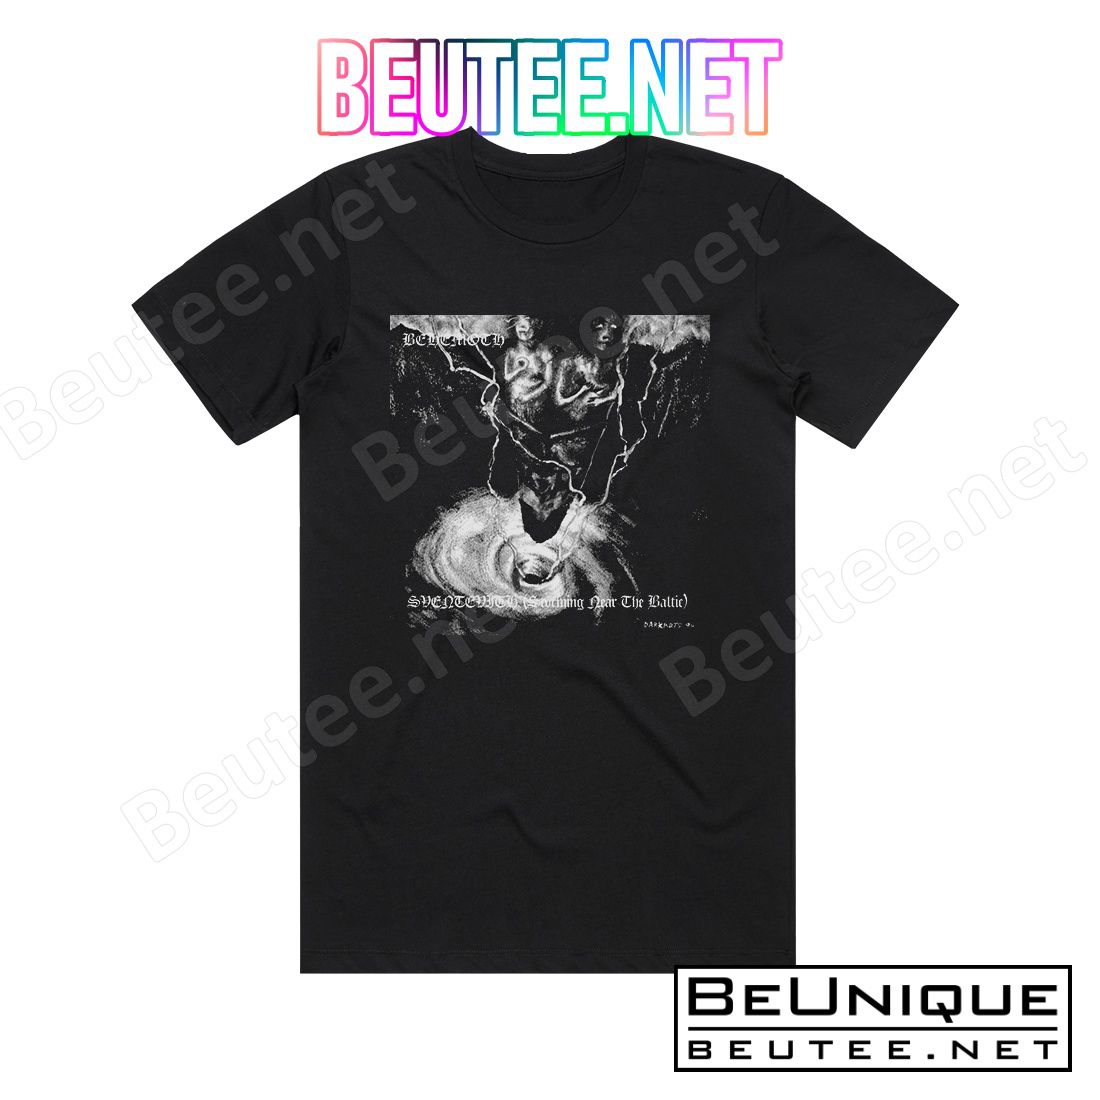 Behemoth Sventevith Storming Near The Baltic 4 Album Cover T-Shirt